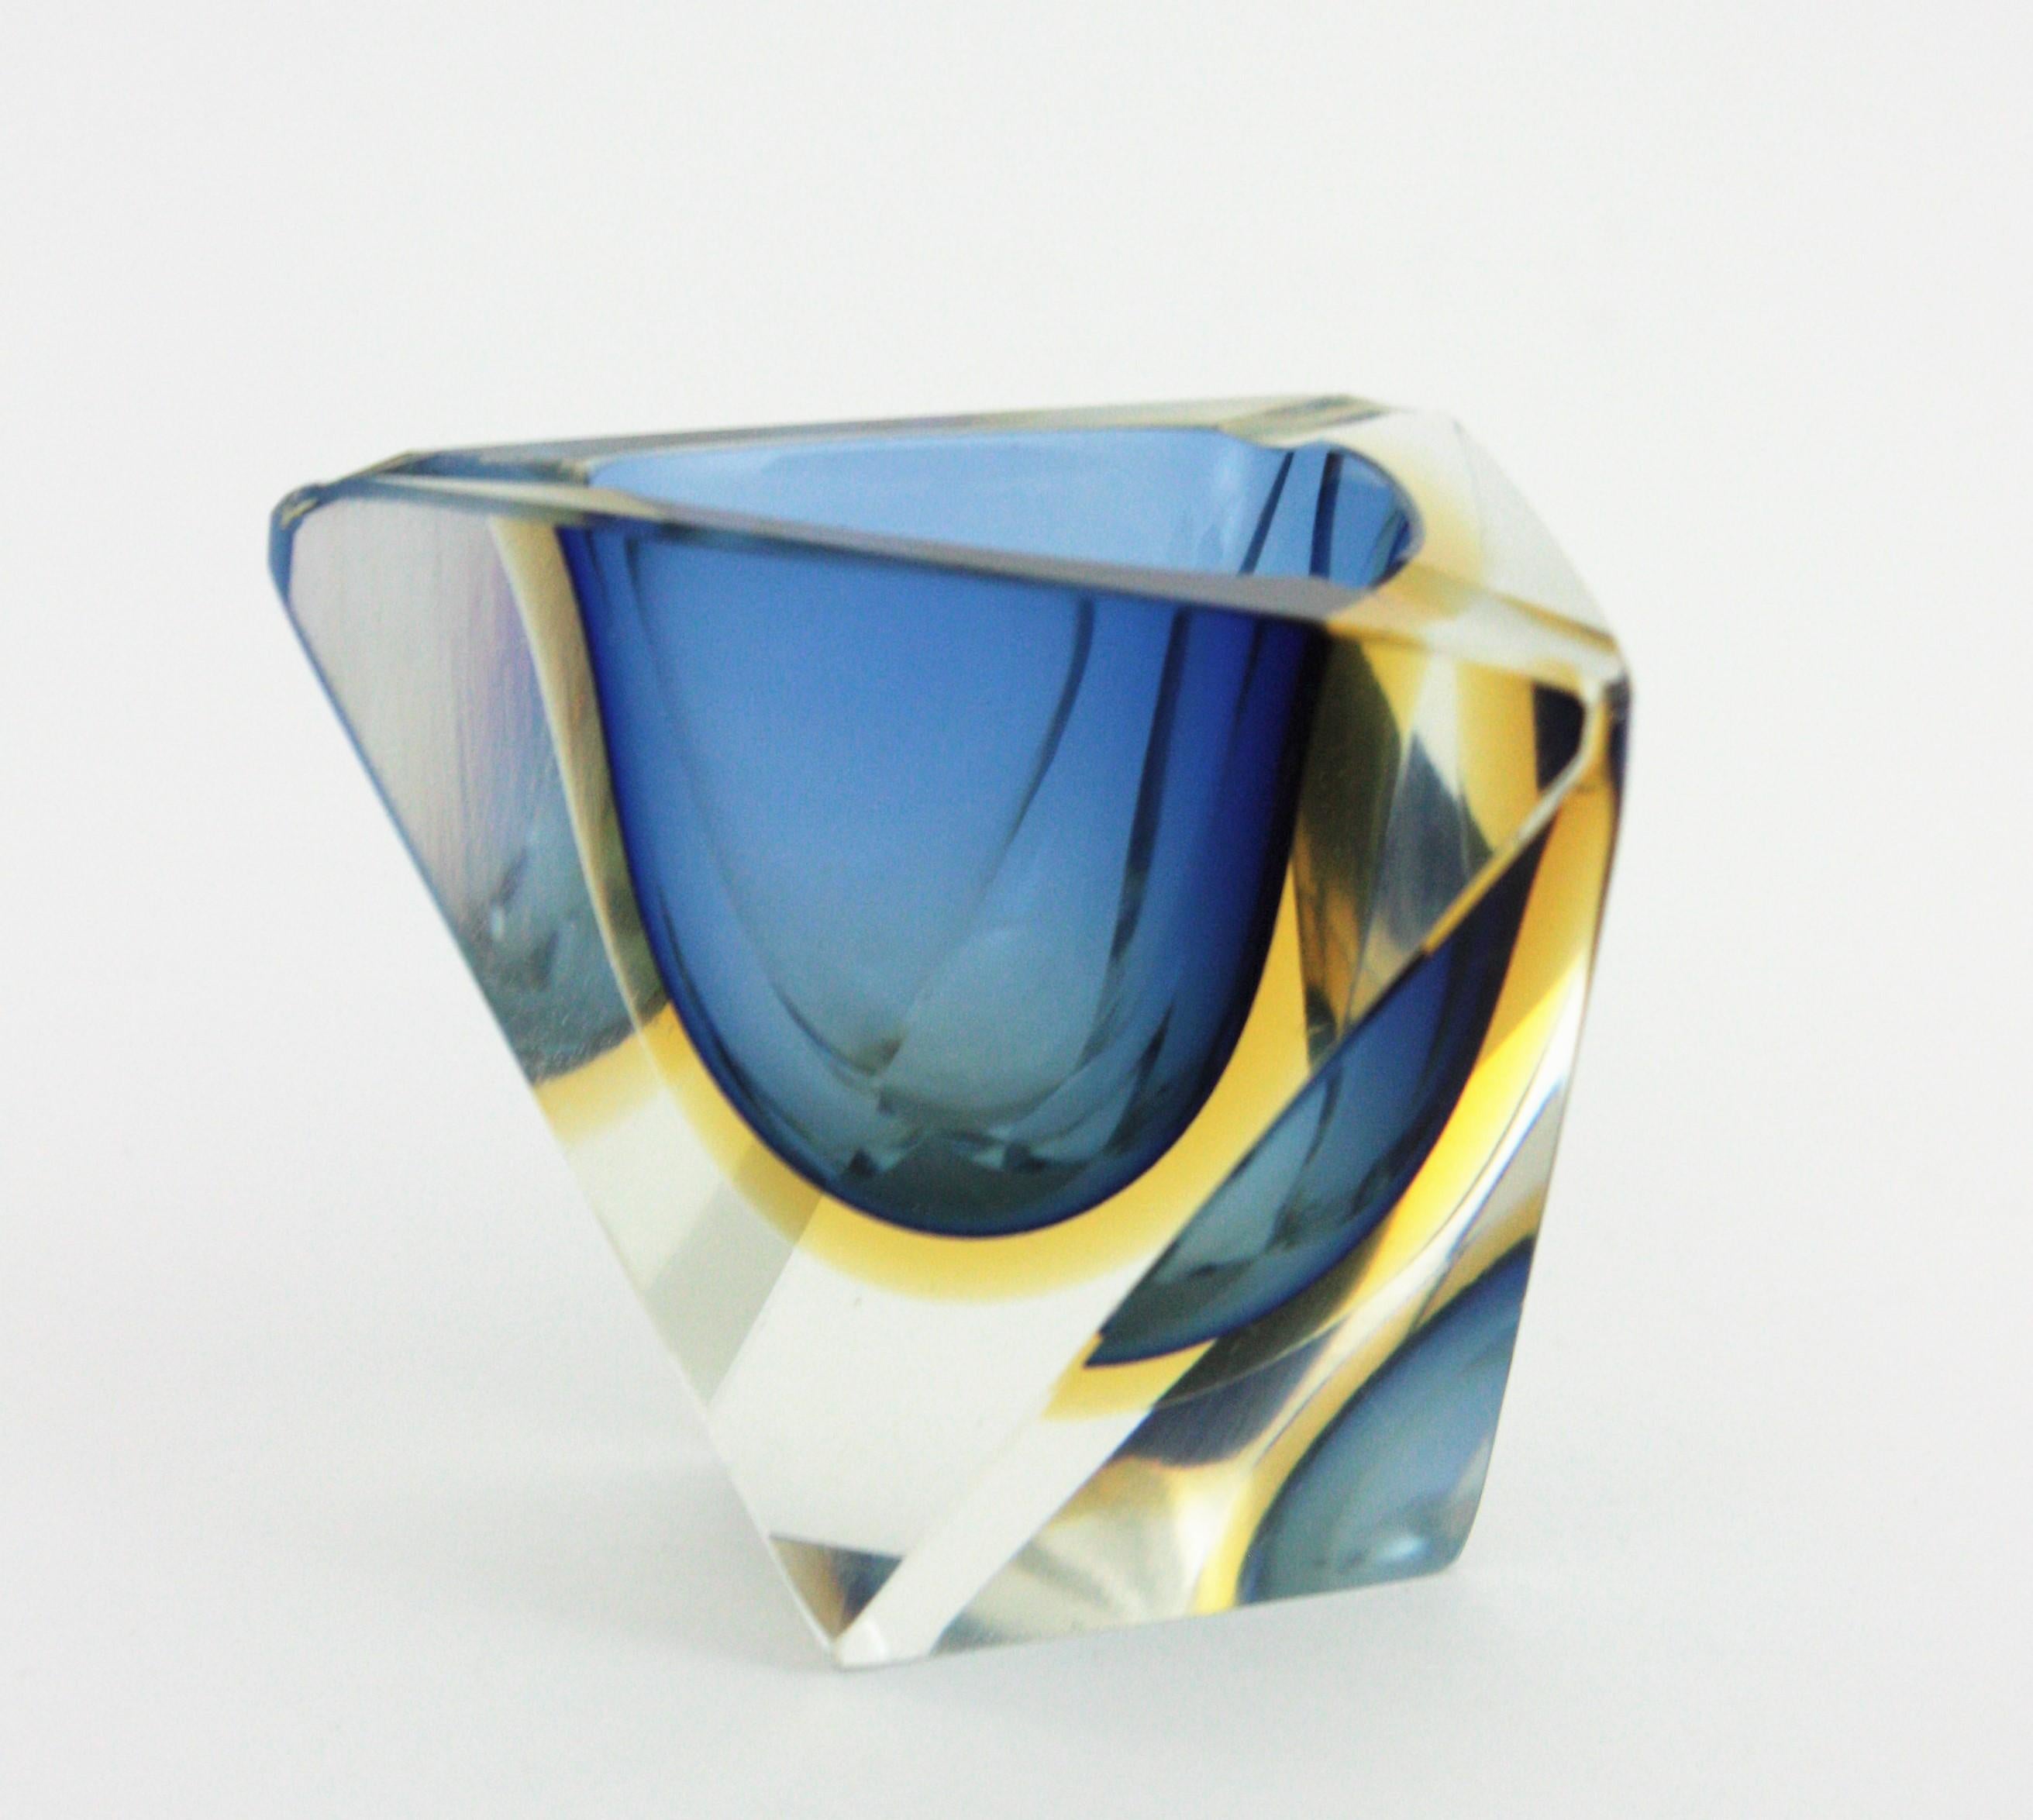 Italian Flavio Poli Murano Sommerso Blue & Yellow Faceted Triangular Glass Ashtray Bowl For Sale